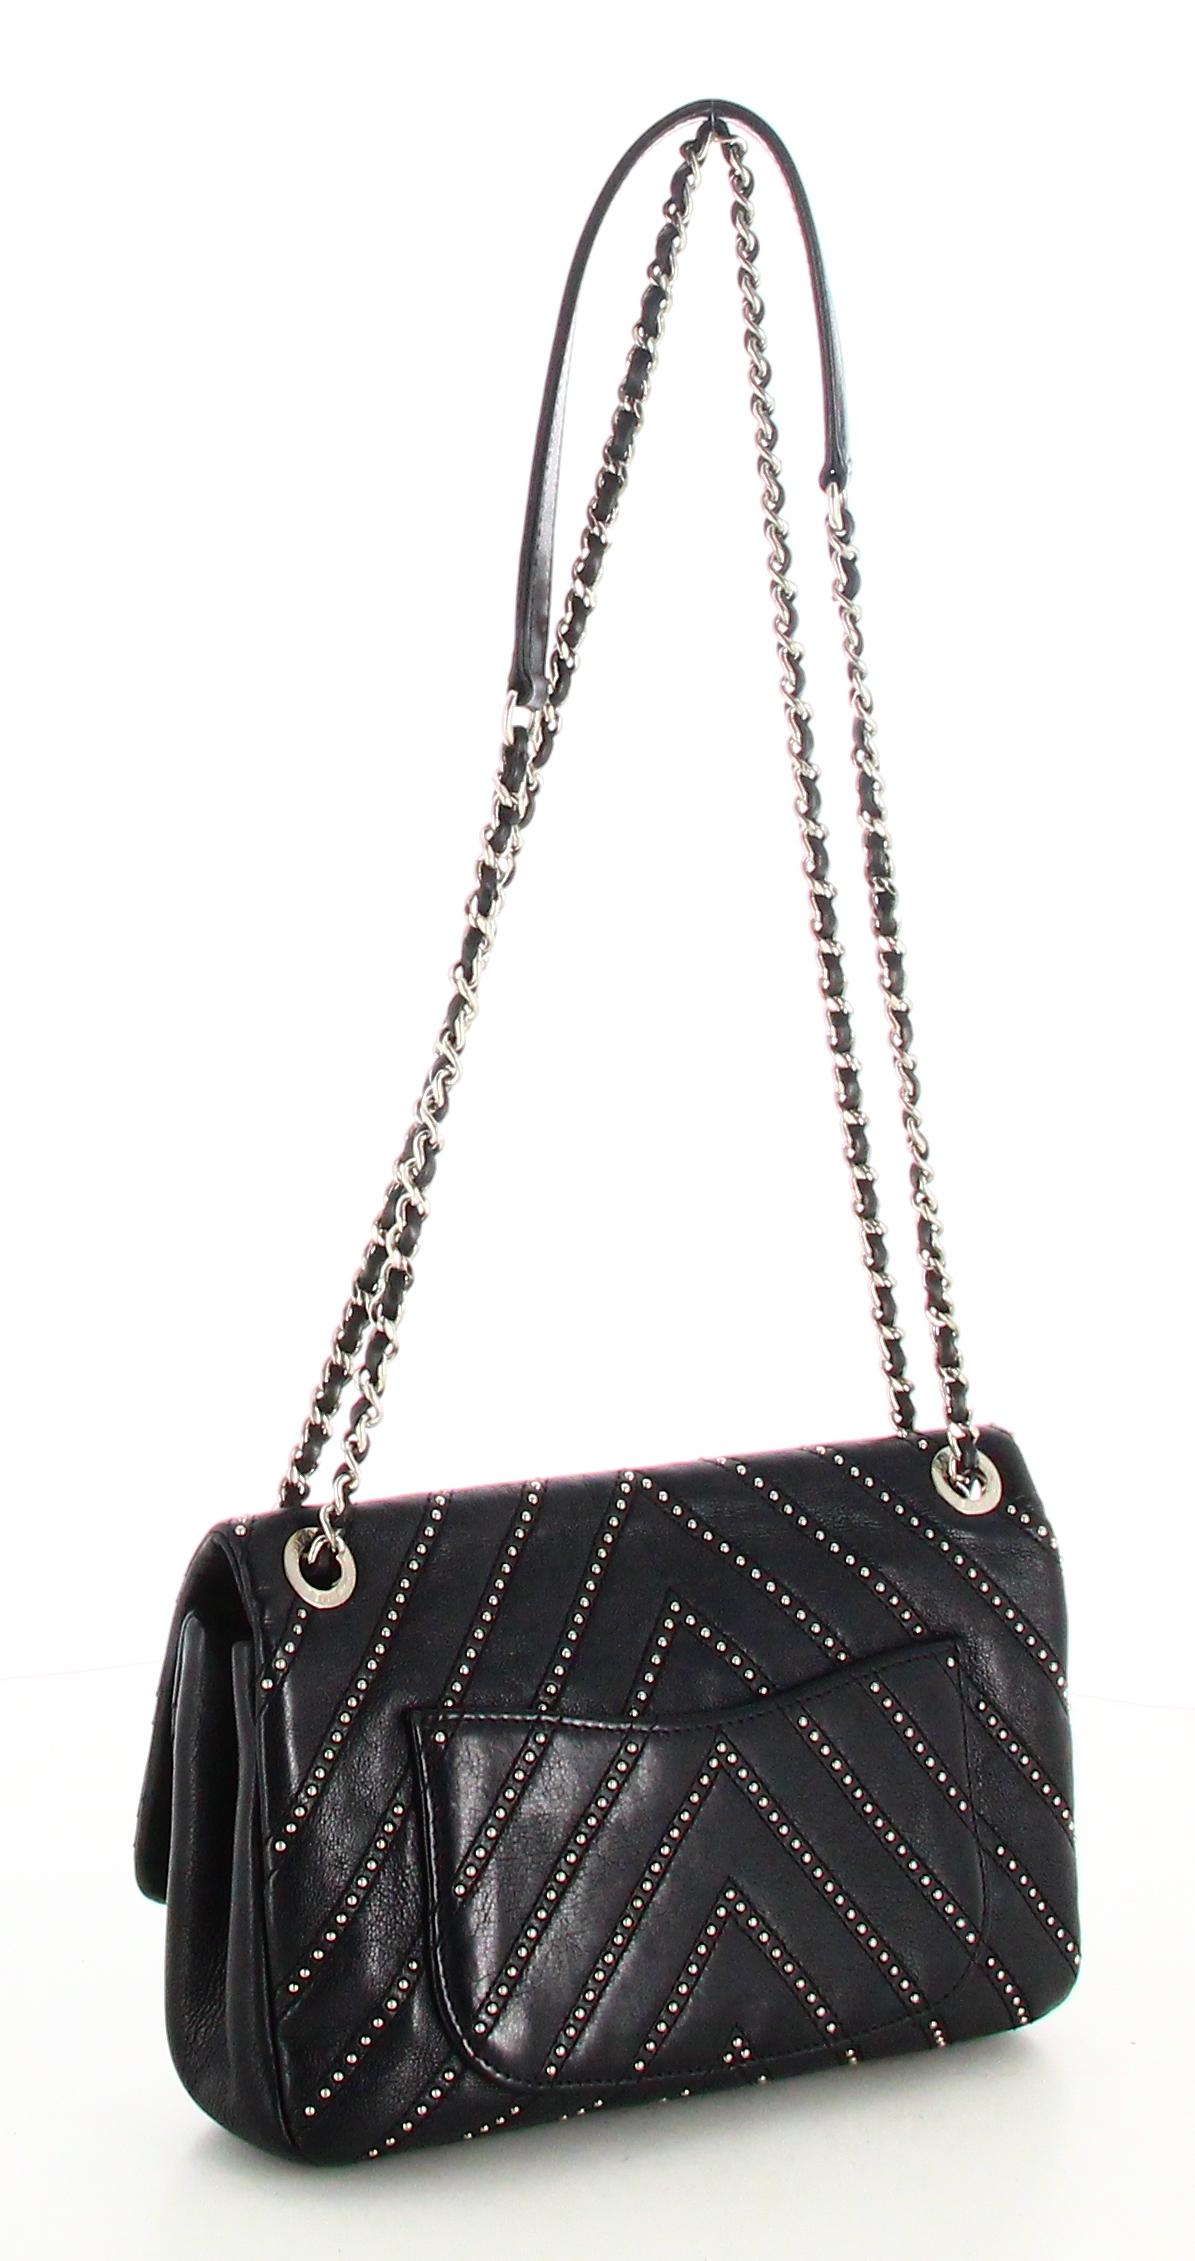 Women's or Men's 2017 Chanel Mini Handbag Chevron Stud Wars Flap Leather Black